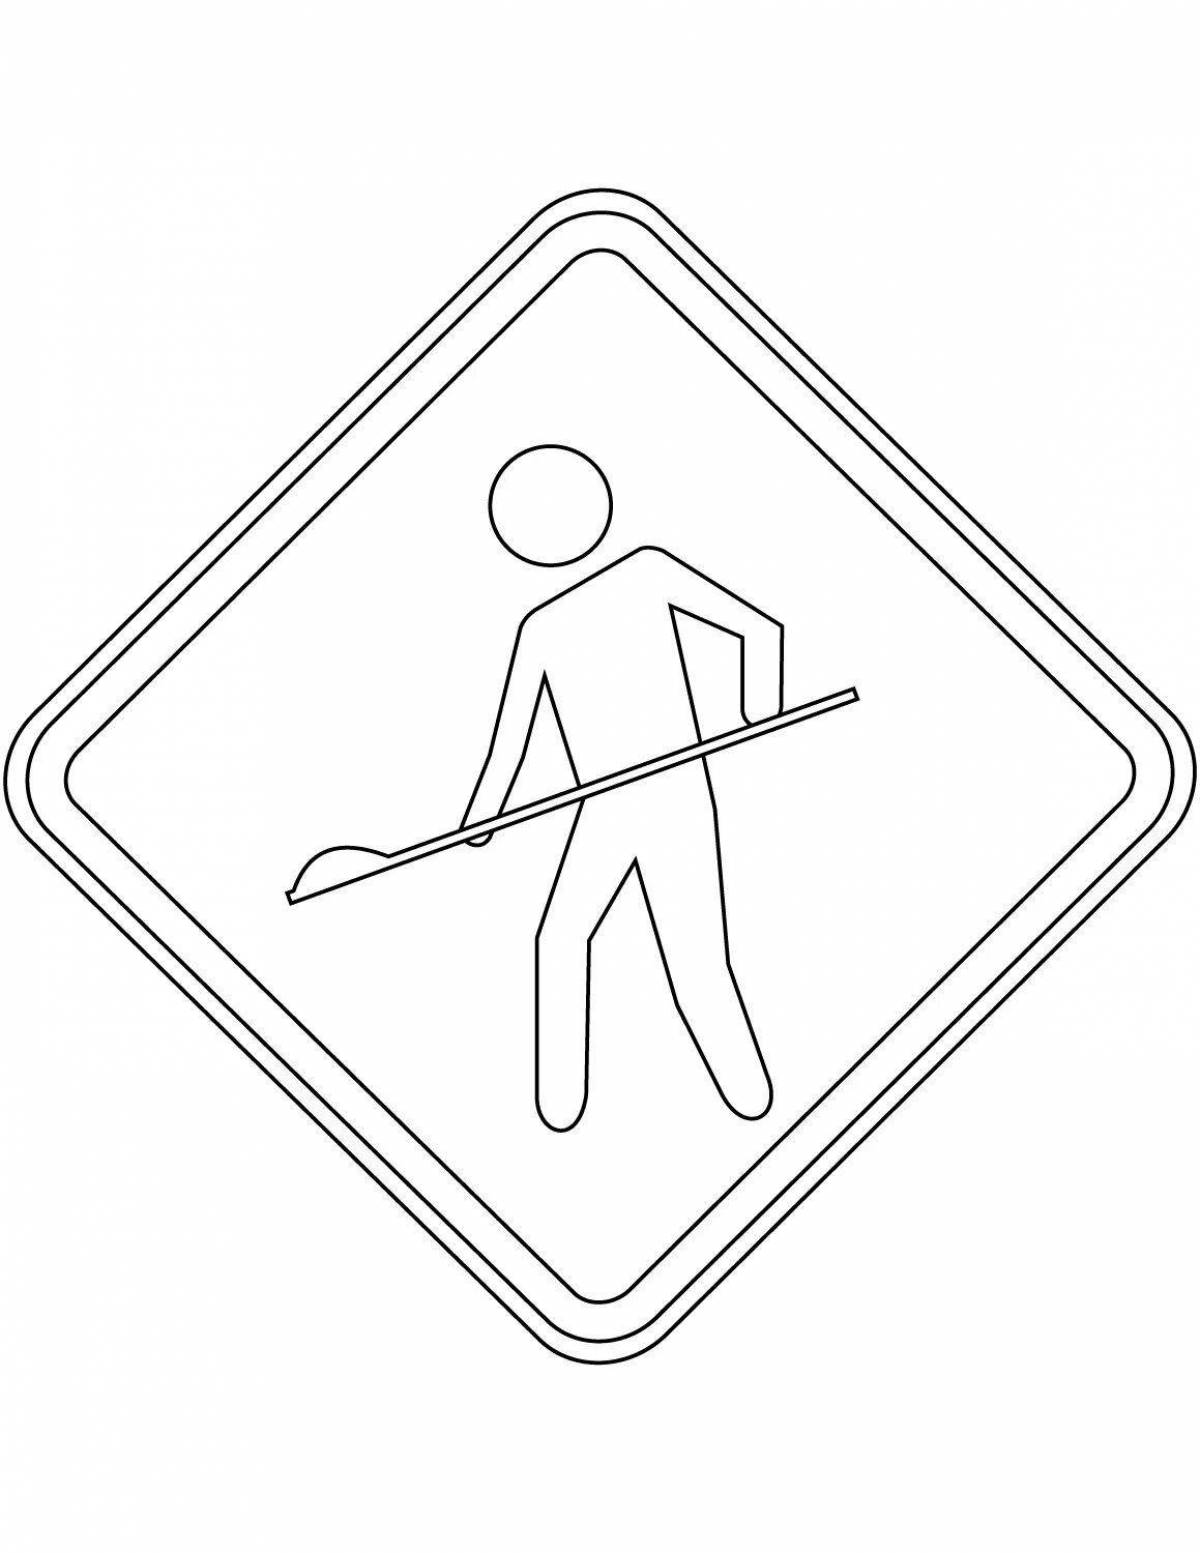 Attention-grabbing traffic sign for pedestrians